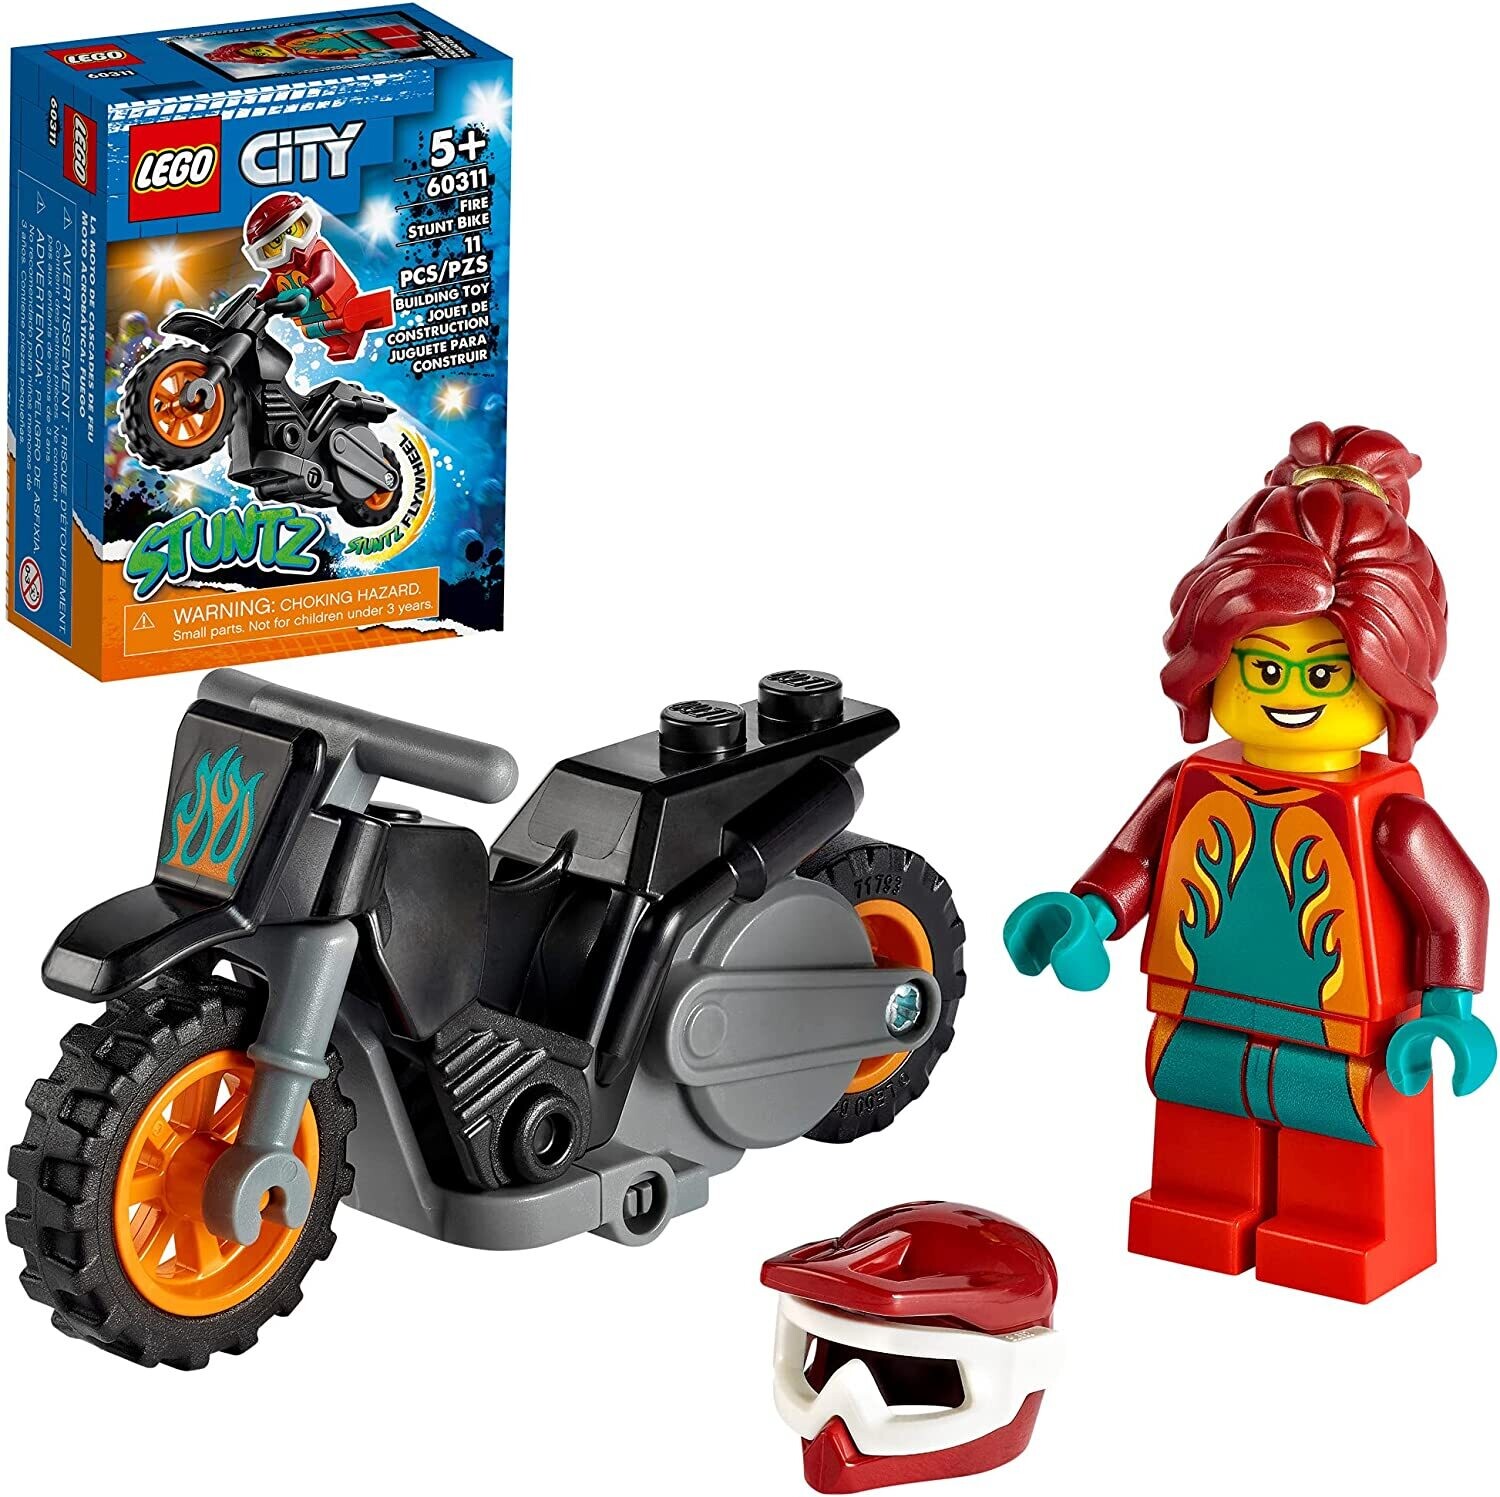 Lego 60311 City Stuntz Fire Stunt Bike